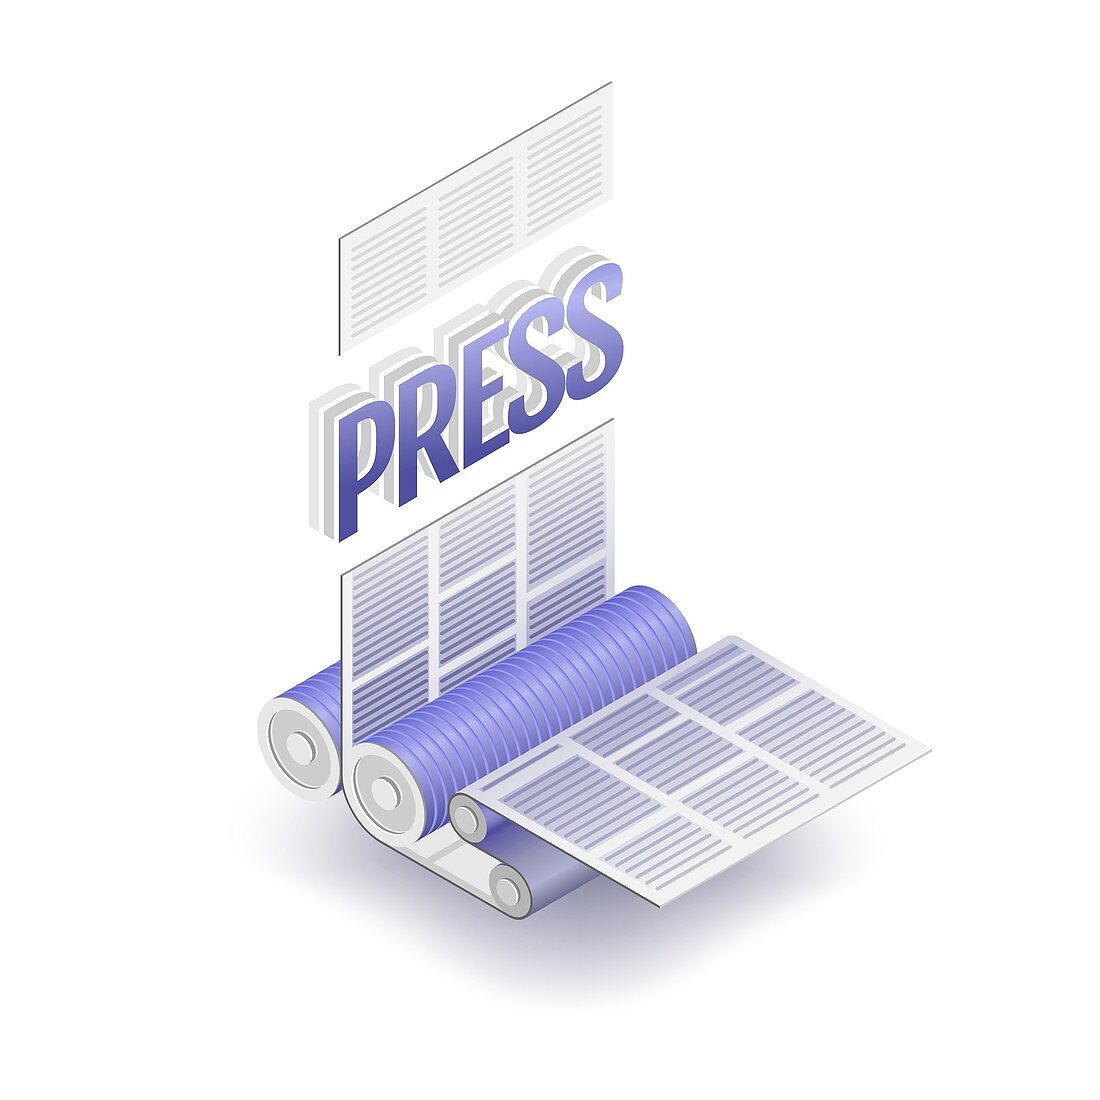 Printing press, conceptual illustration